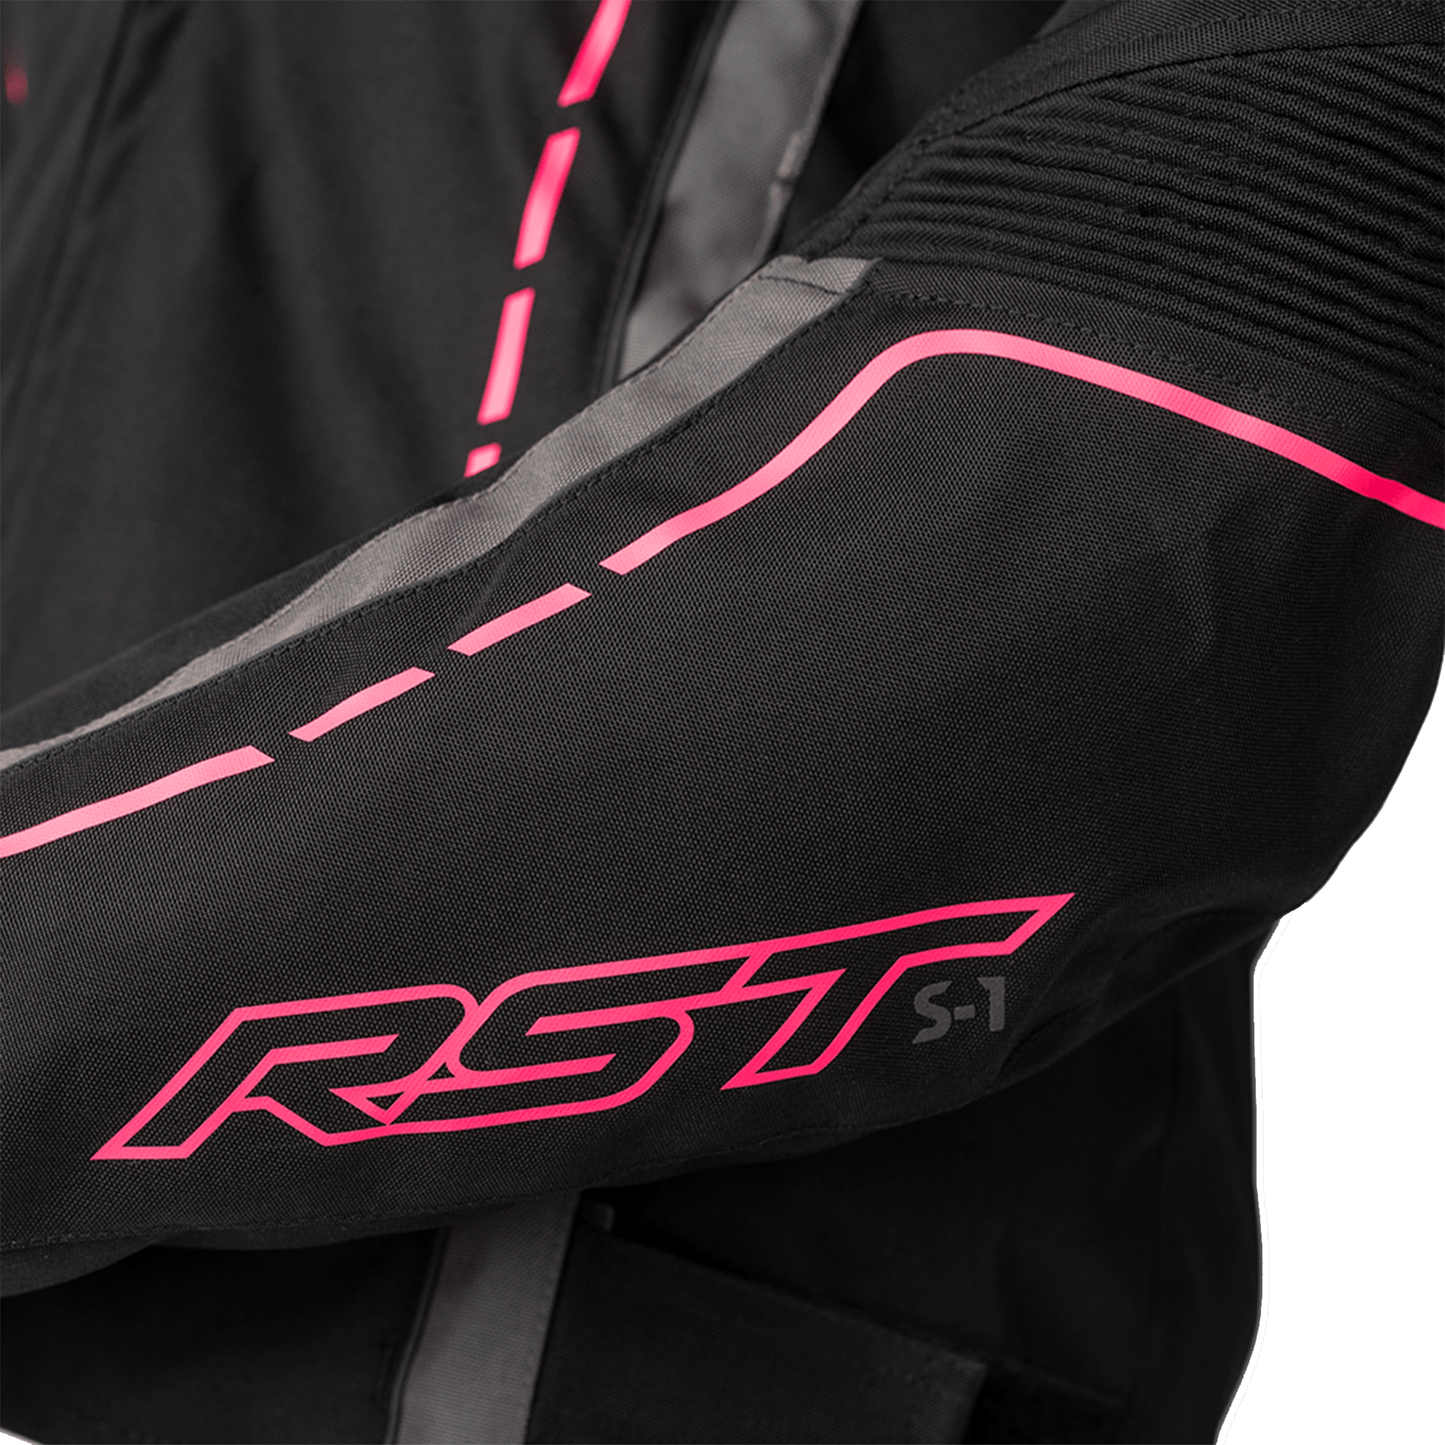 RST S1 Textile Ladies Jacket - Black/Neon Pink